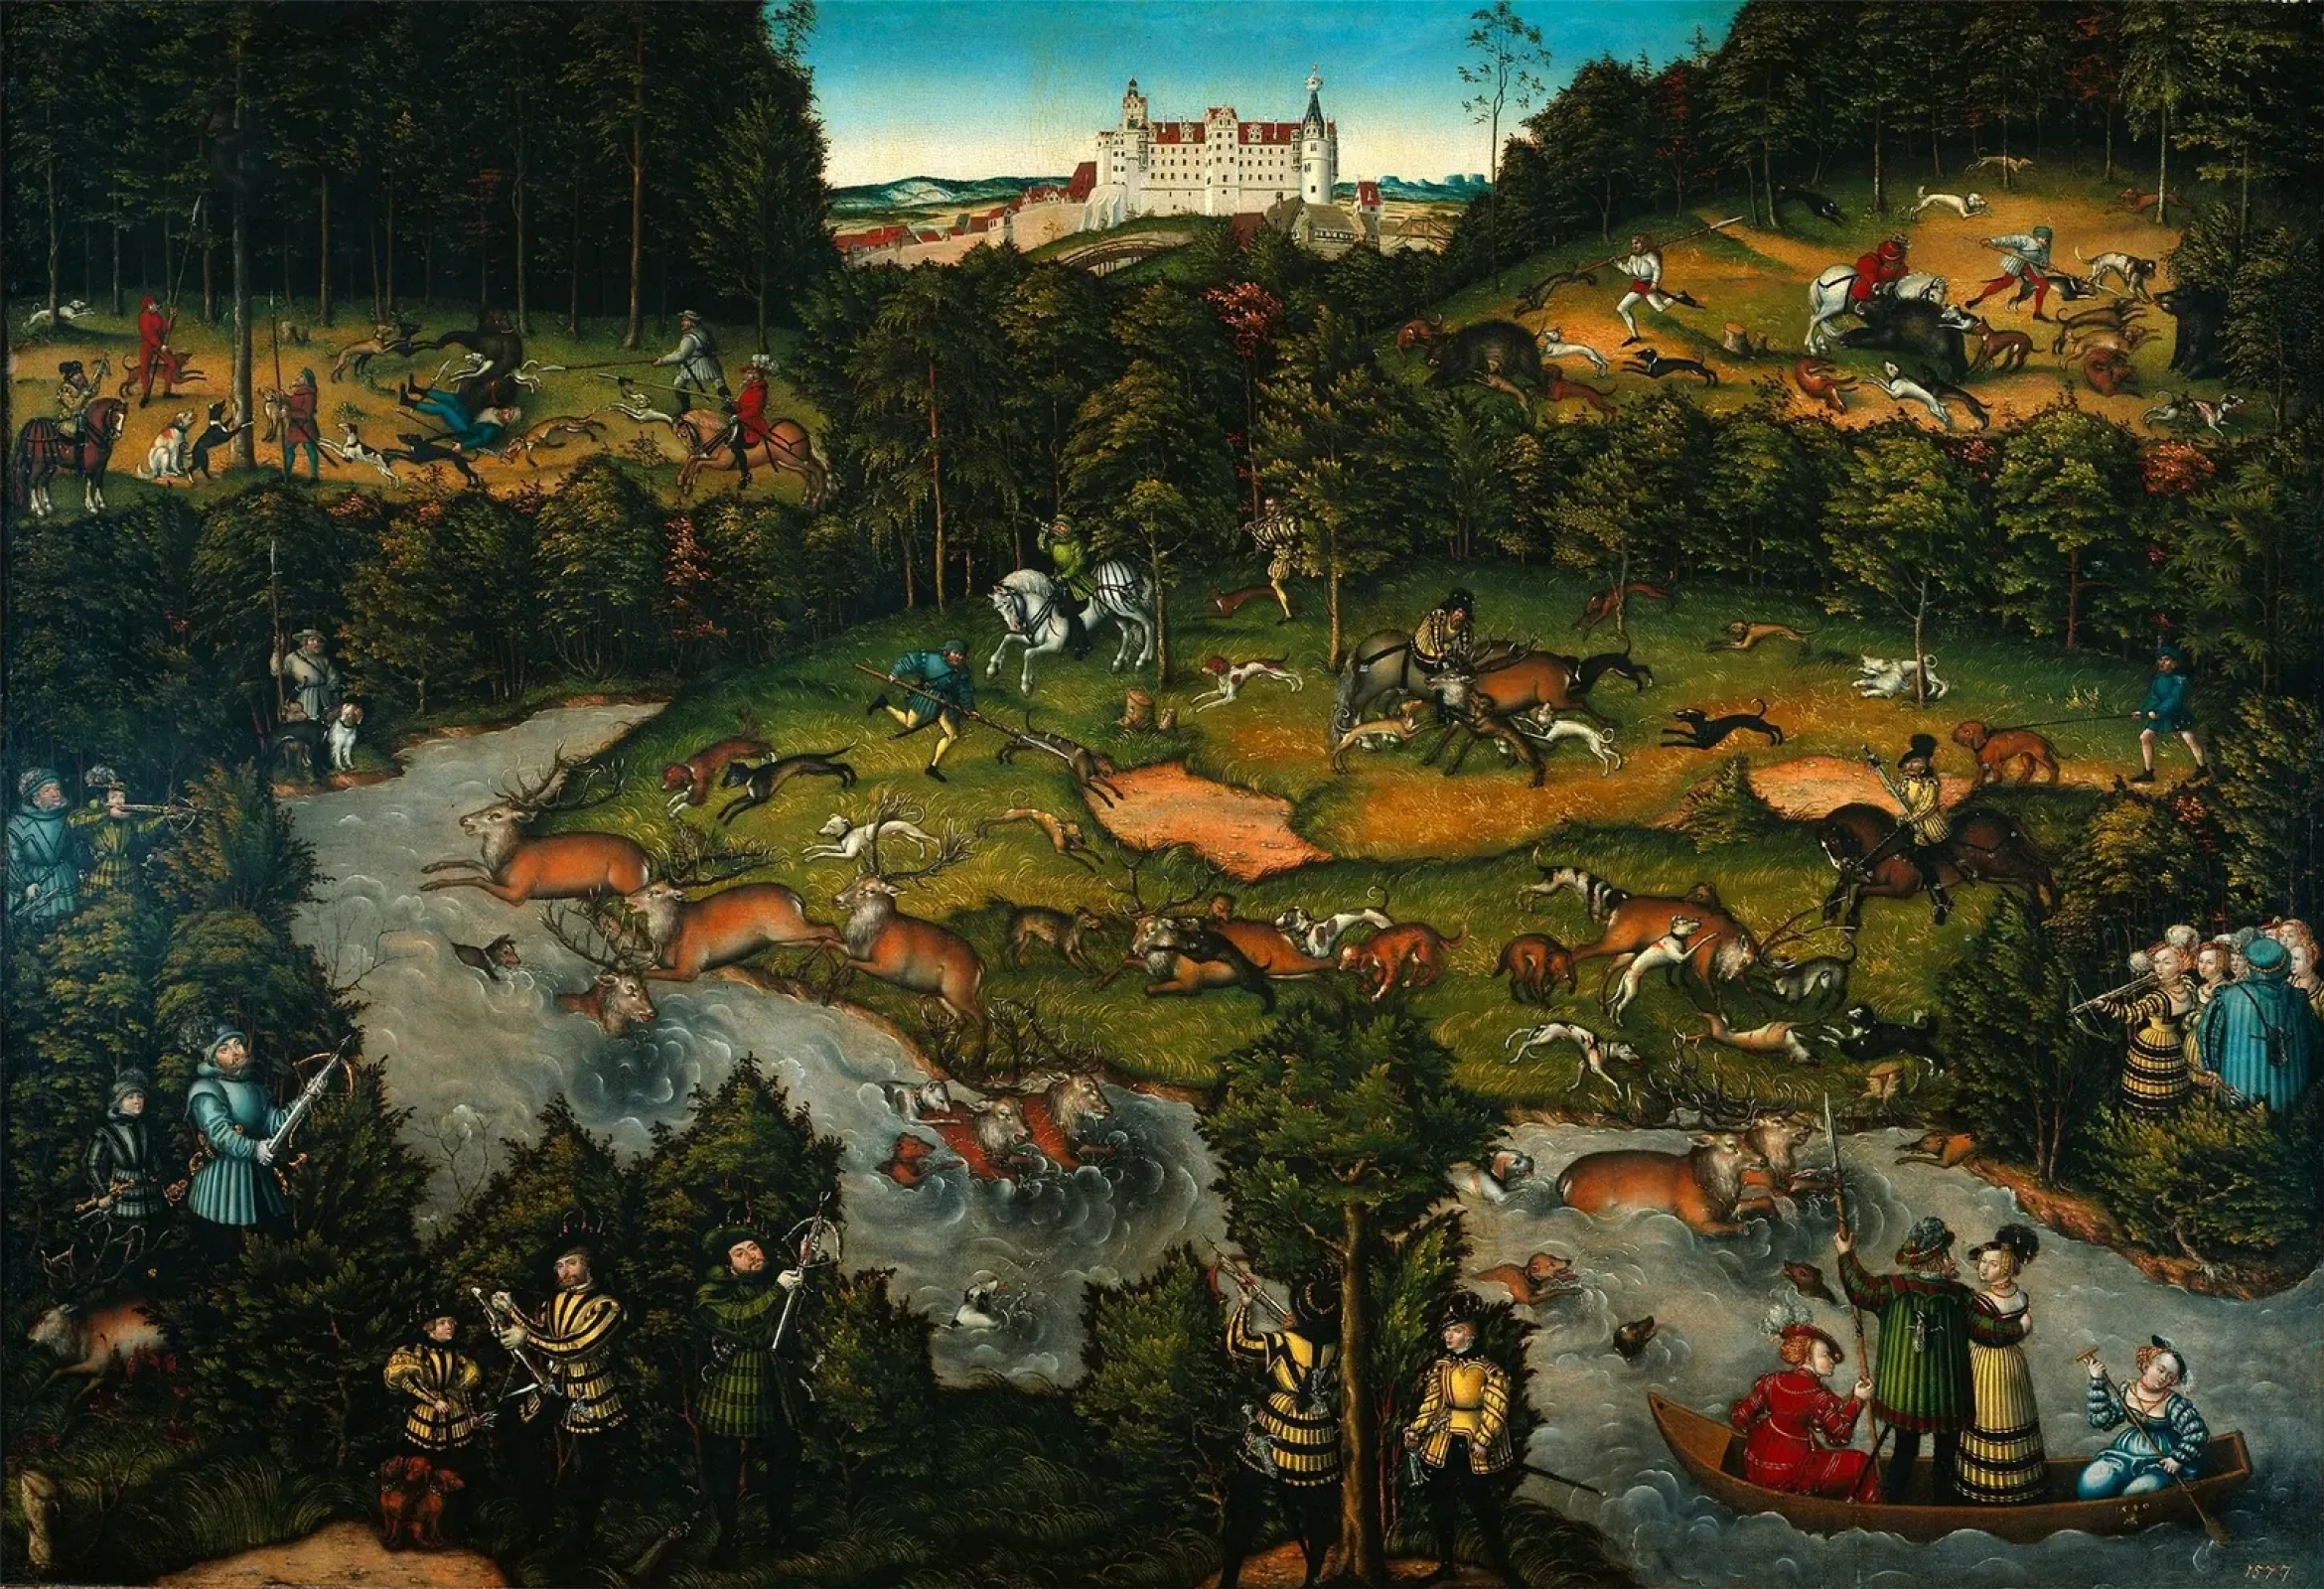 Lucas Cranach the Elder. Deer hunting near the castle Hartenfels